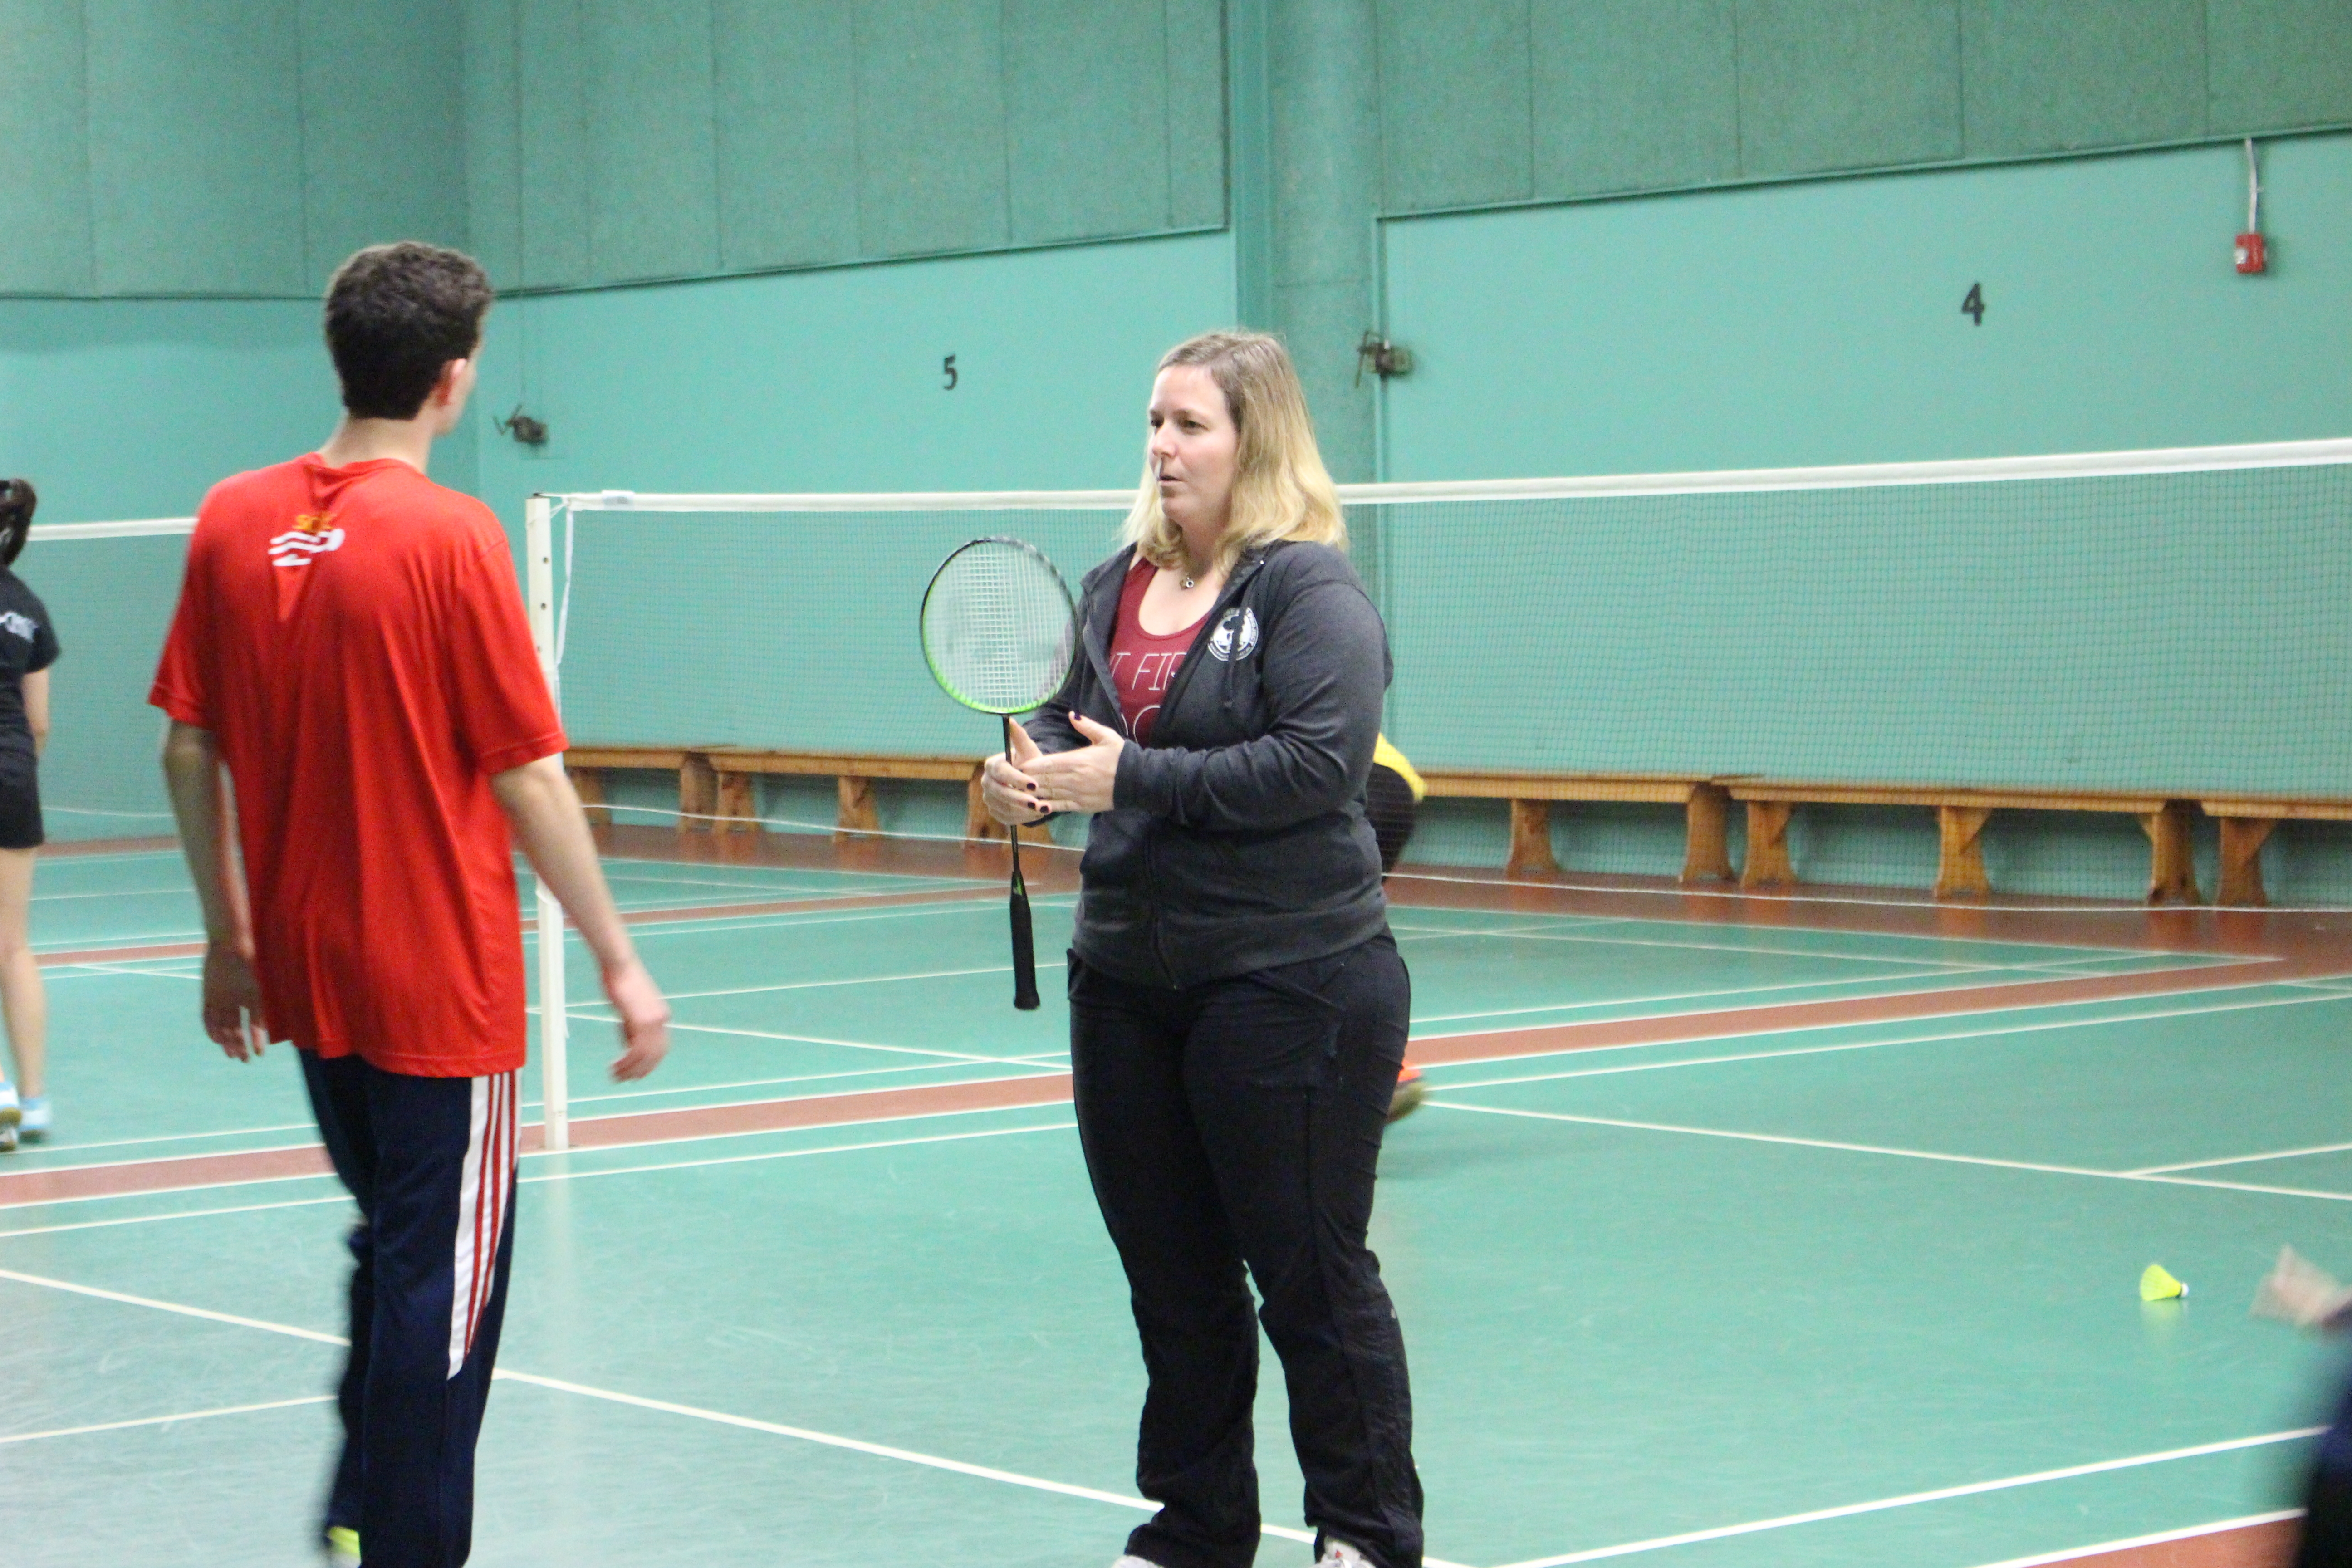 Badminton Set - Sam's Club